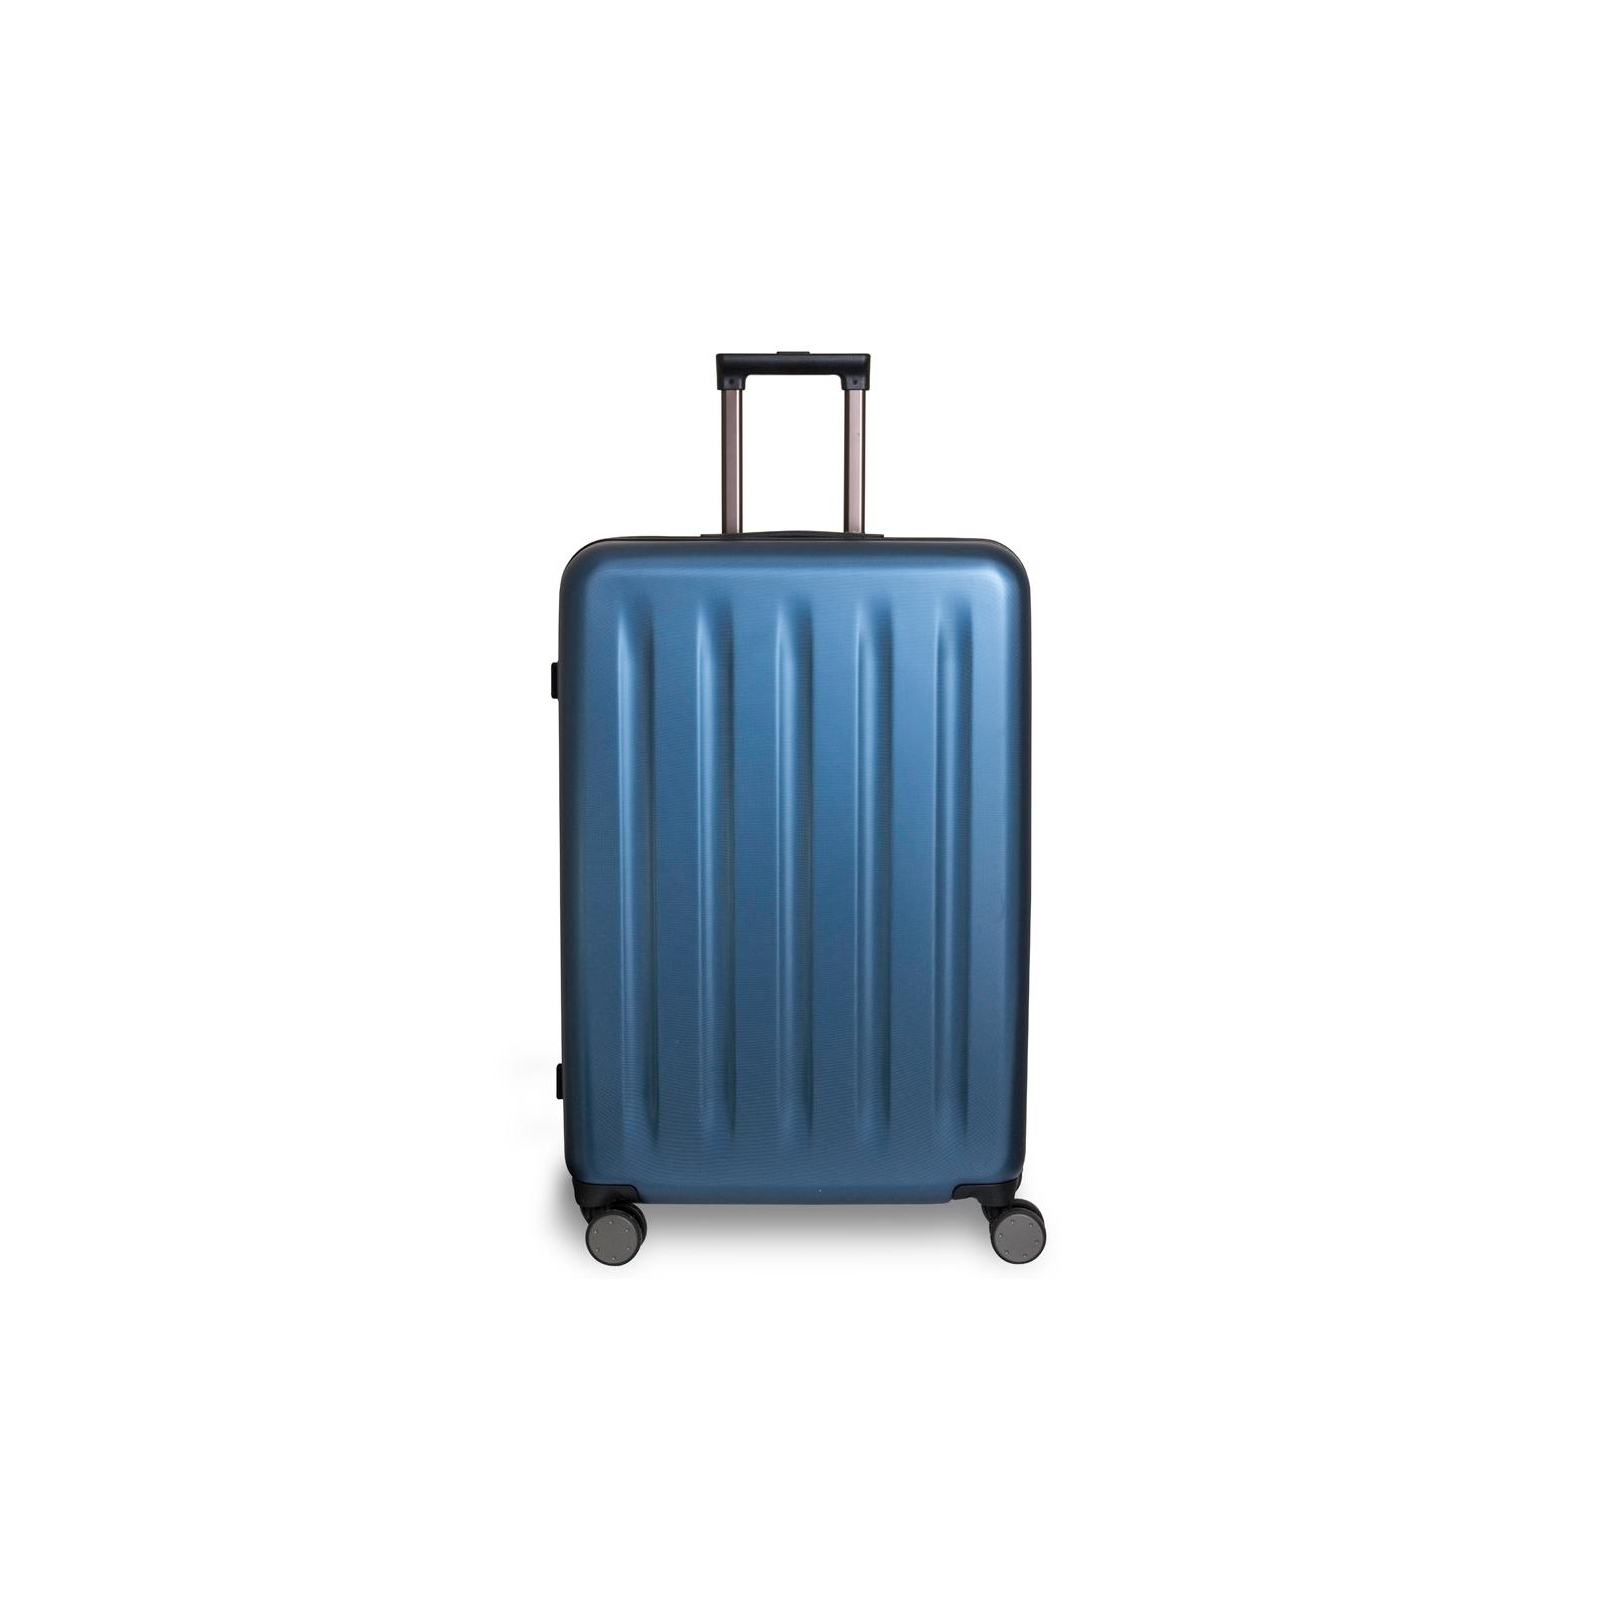 Валіза Xiaomi Ninetygo PC Luggage 28'' White (6970055341080)